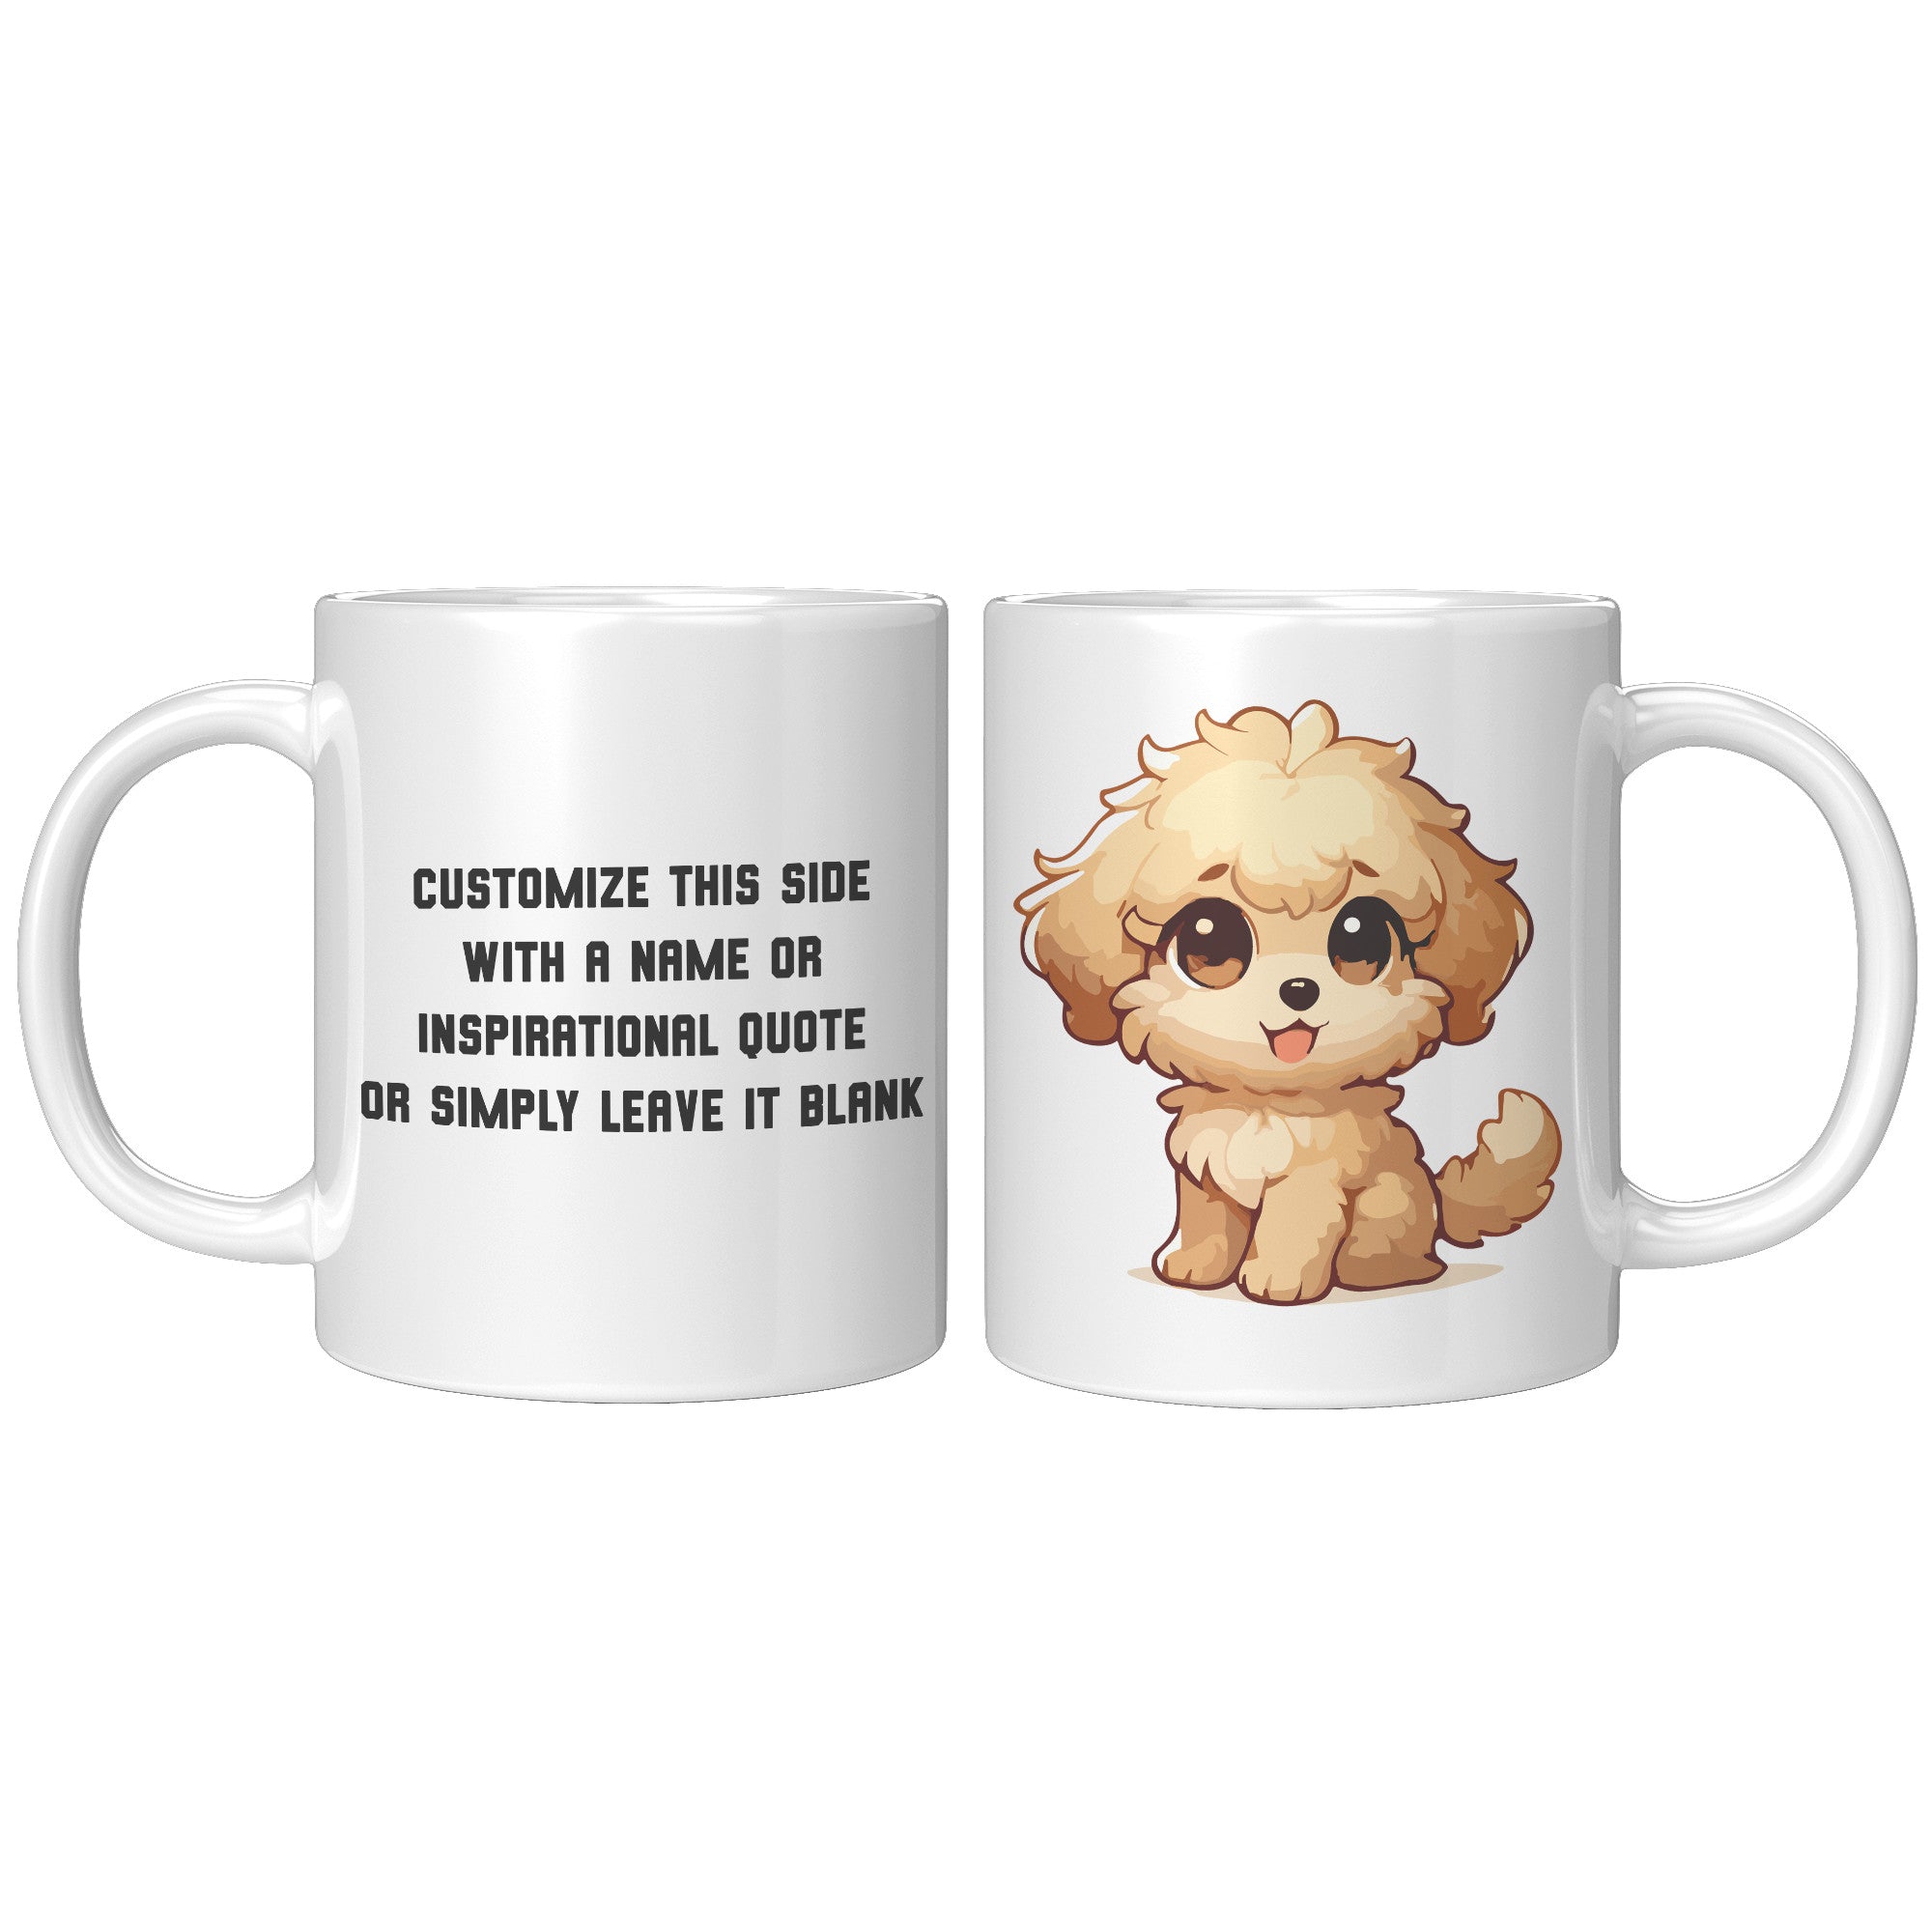 11oz Golden Retriever Cartoon Coffee Mug - Heartwarming Dog Lover Coffee Mug - Perfect Gift for Golden Owners - Friendly Pup Coffee Mug - R